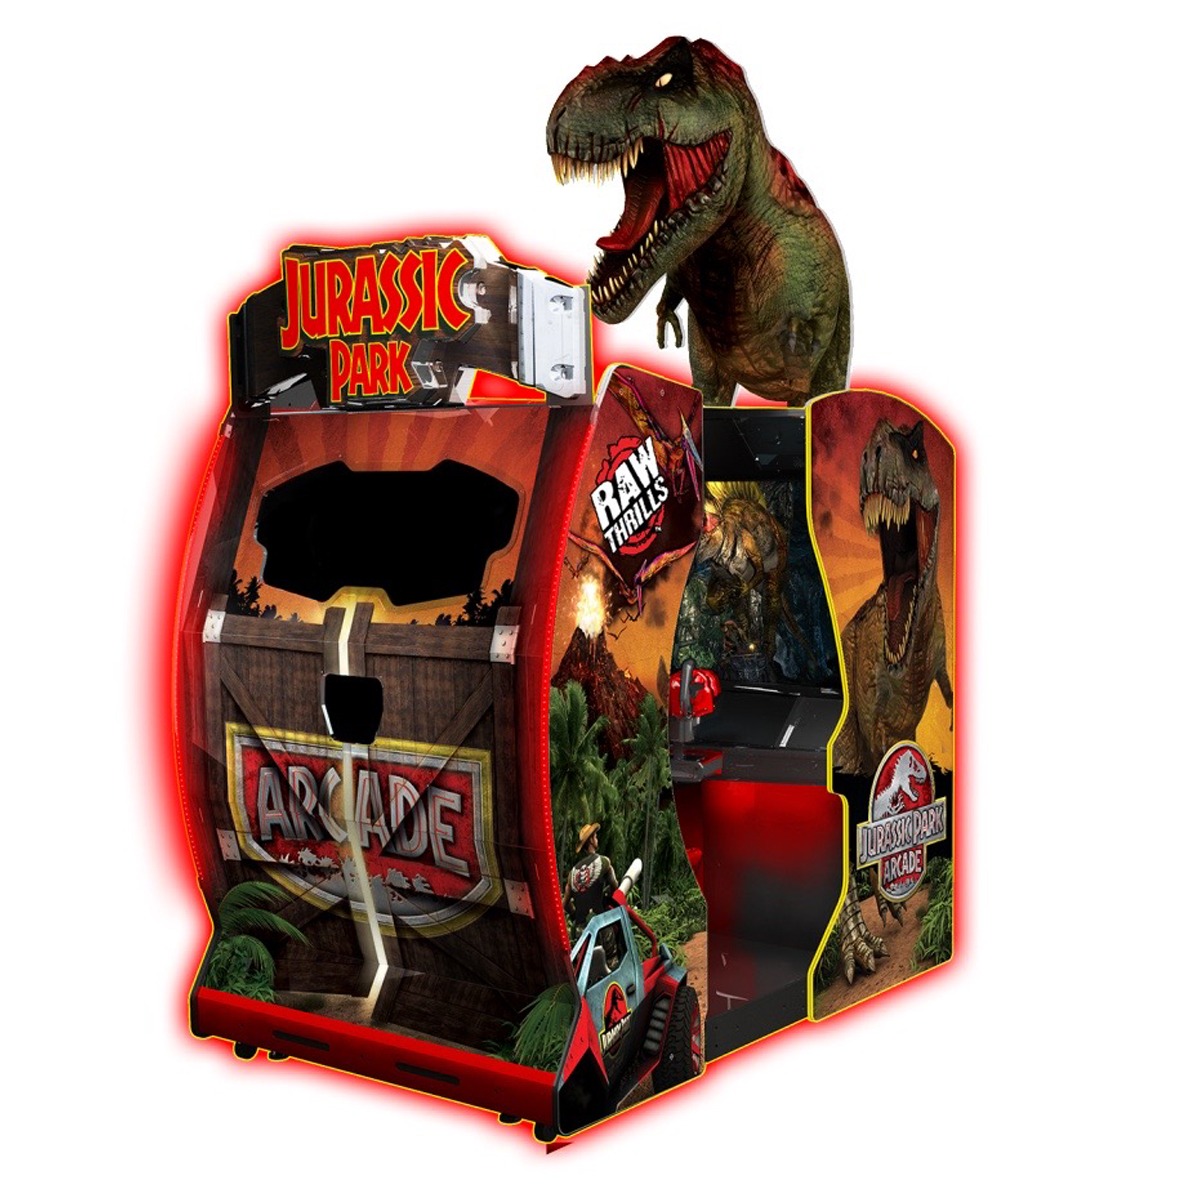 Jurassic-Park-Arcade-1.jpg